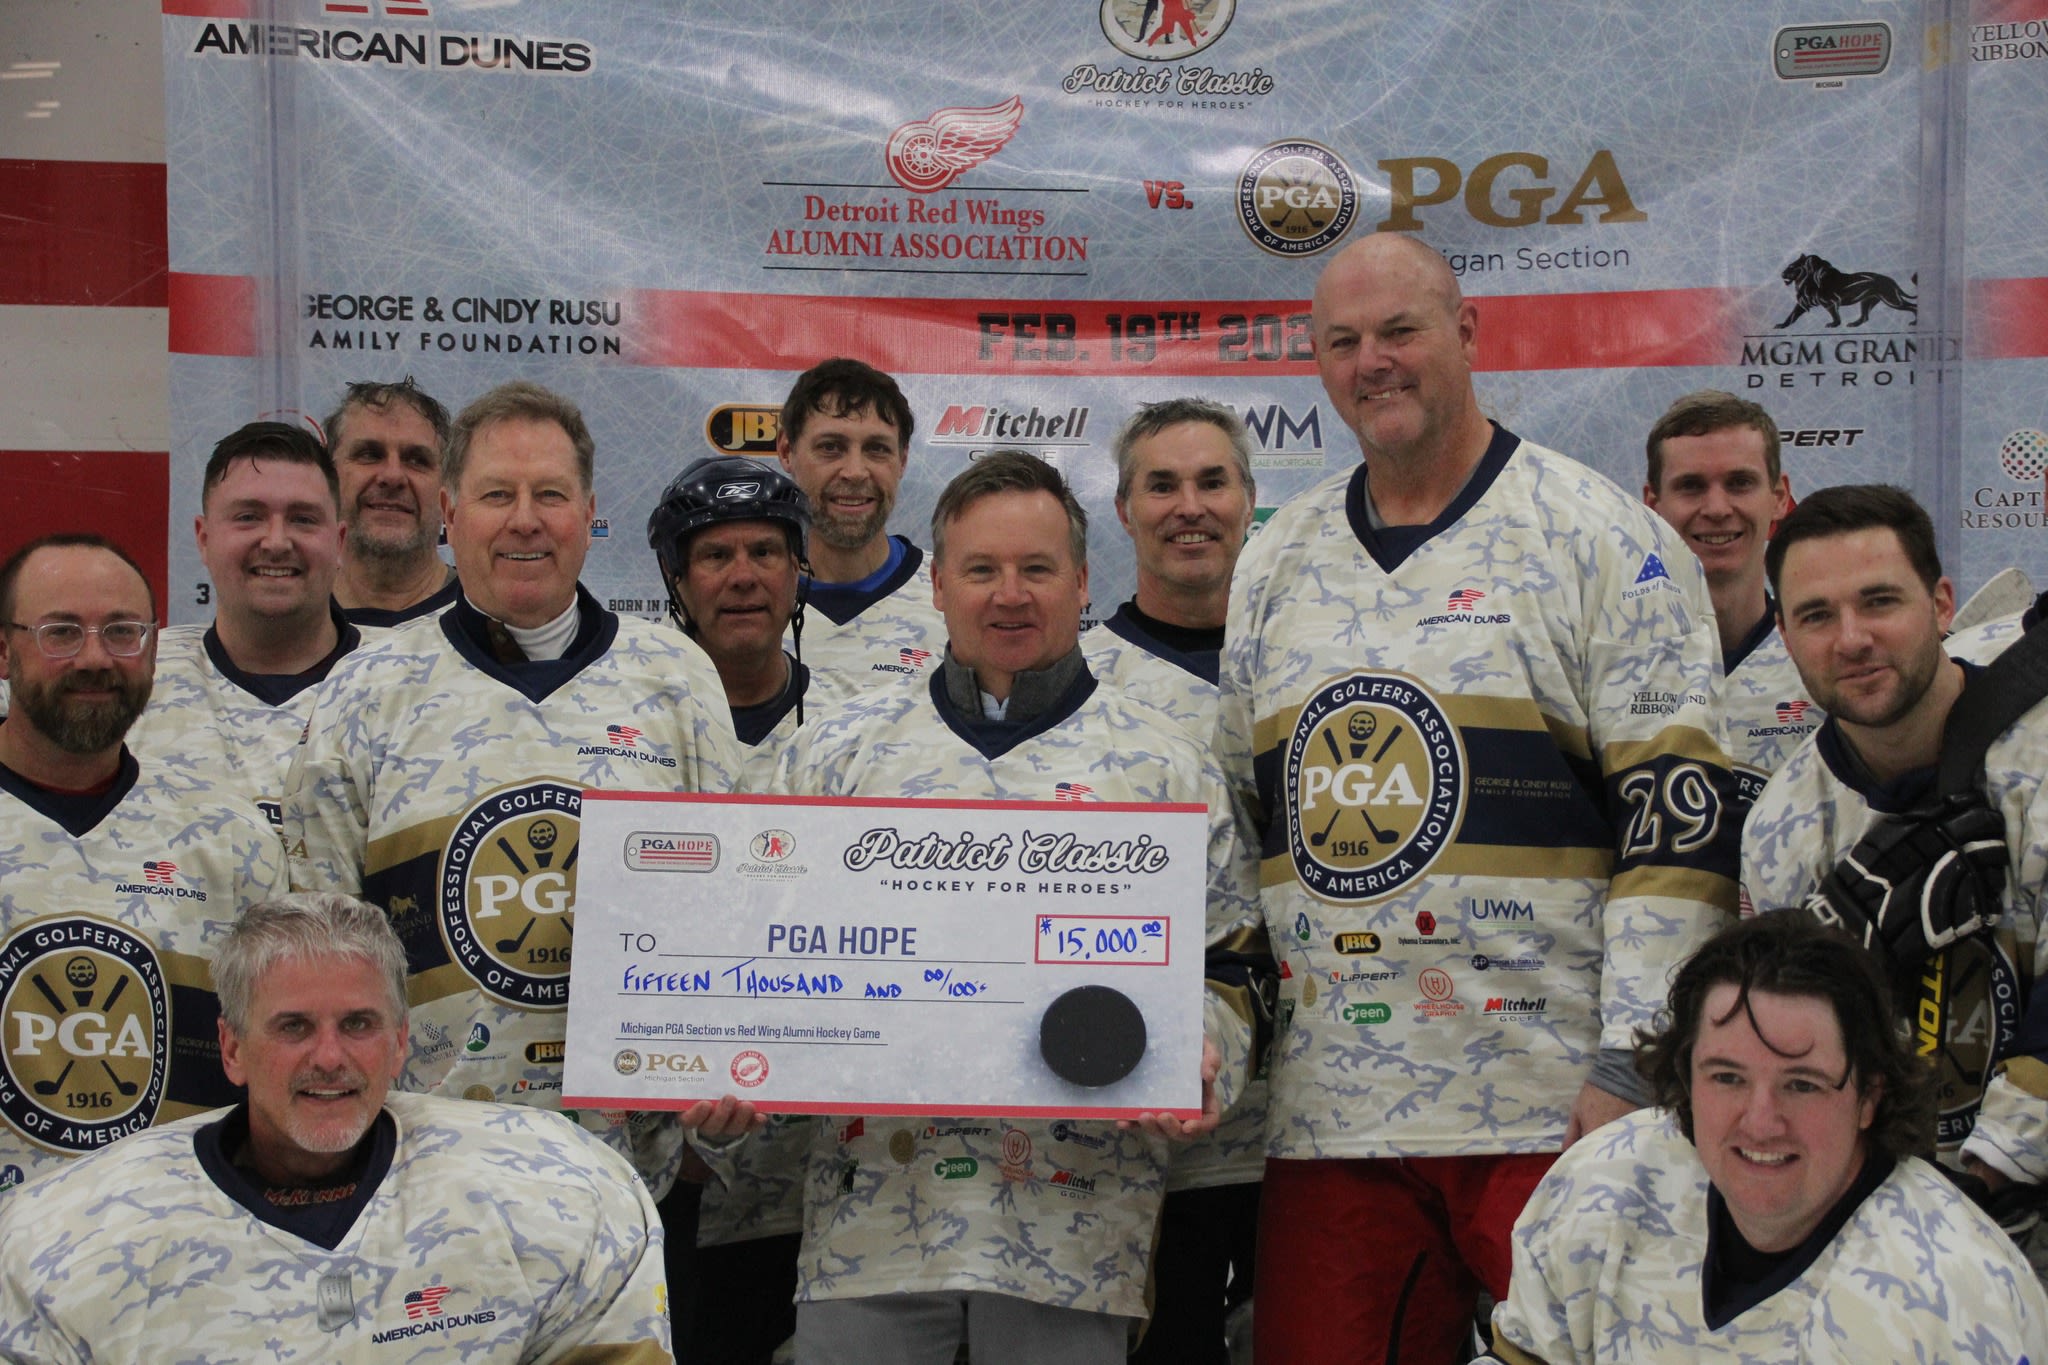 The Michigan PGA team helped raise $15,000 for PGA HOPE programming through the charity hockey game.